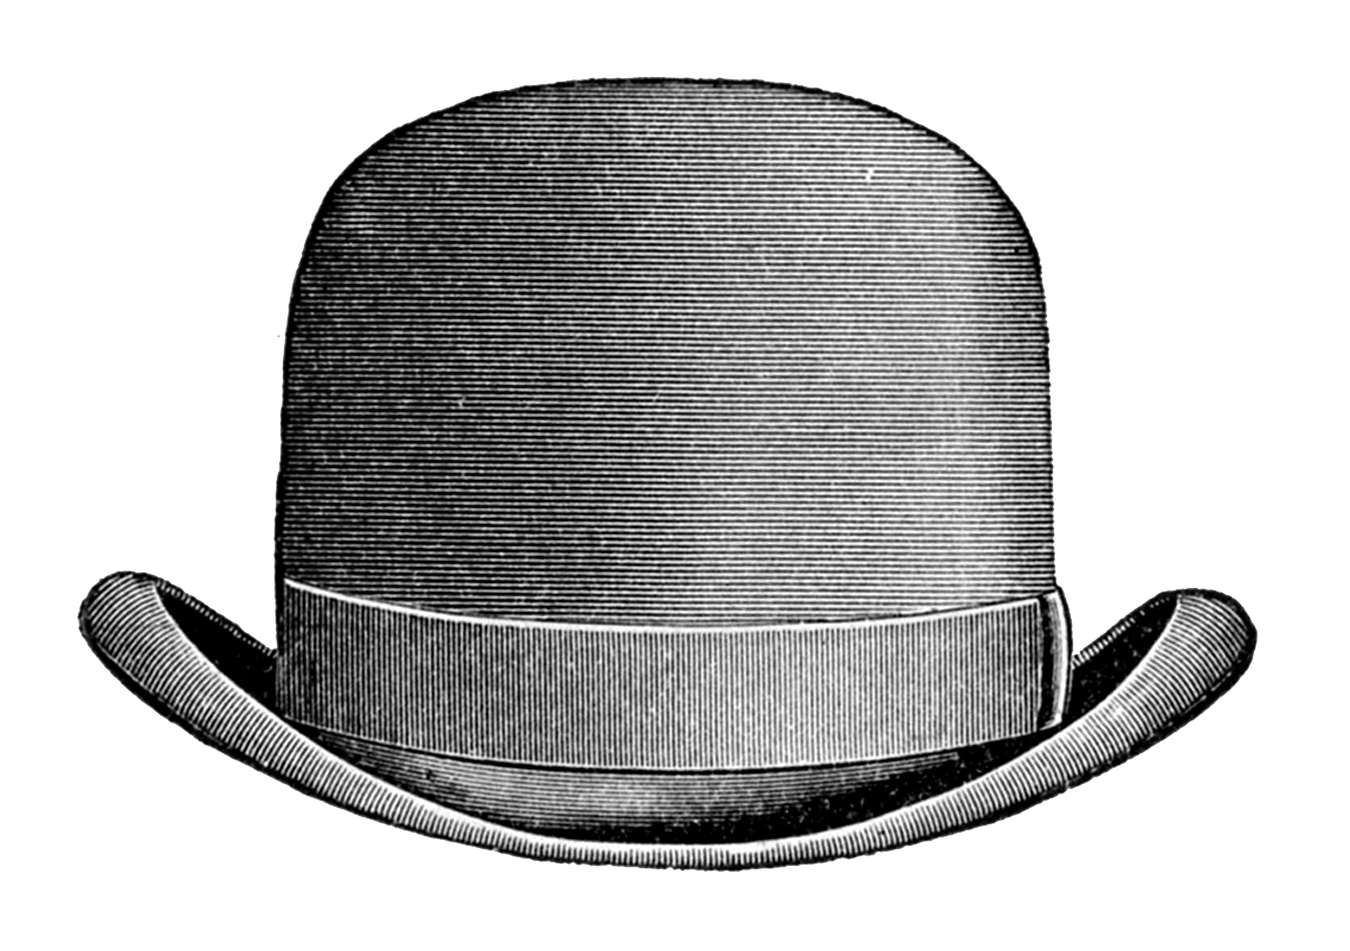 clipart bowler hat - photo #11